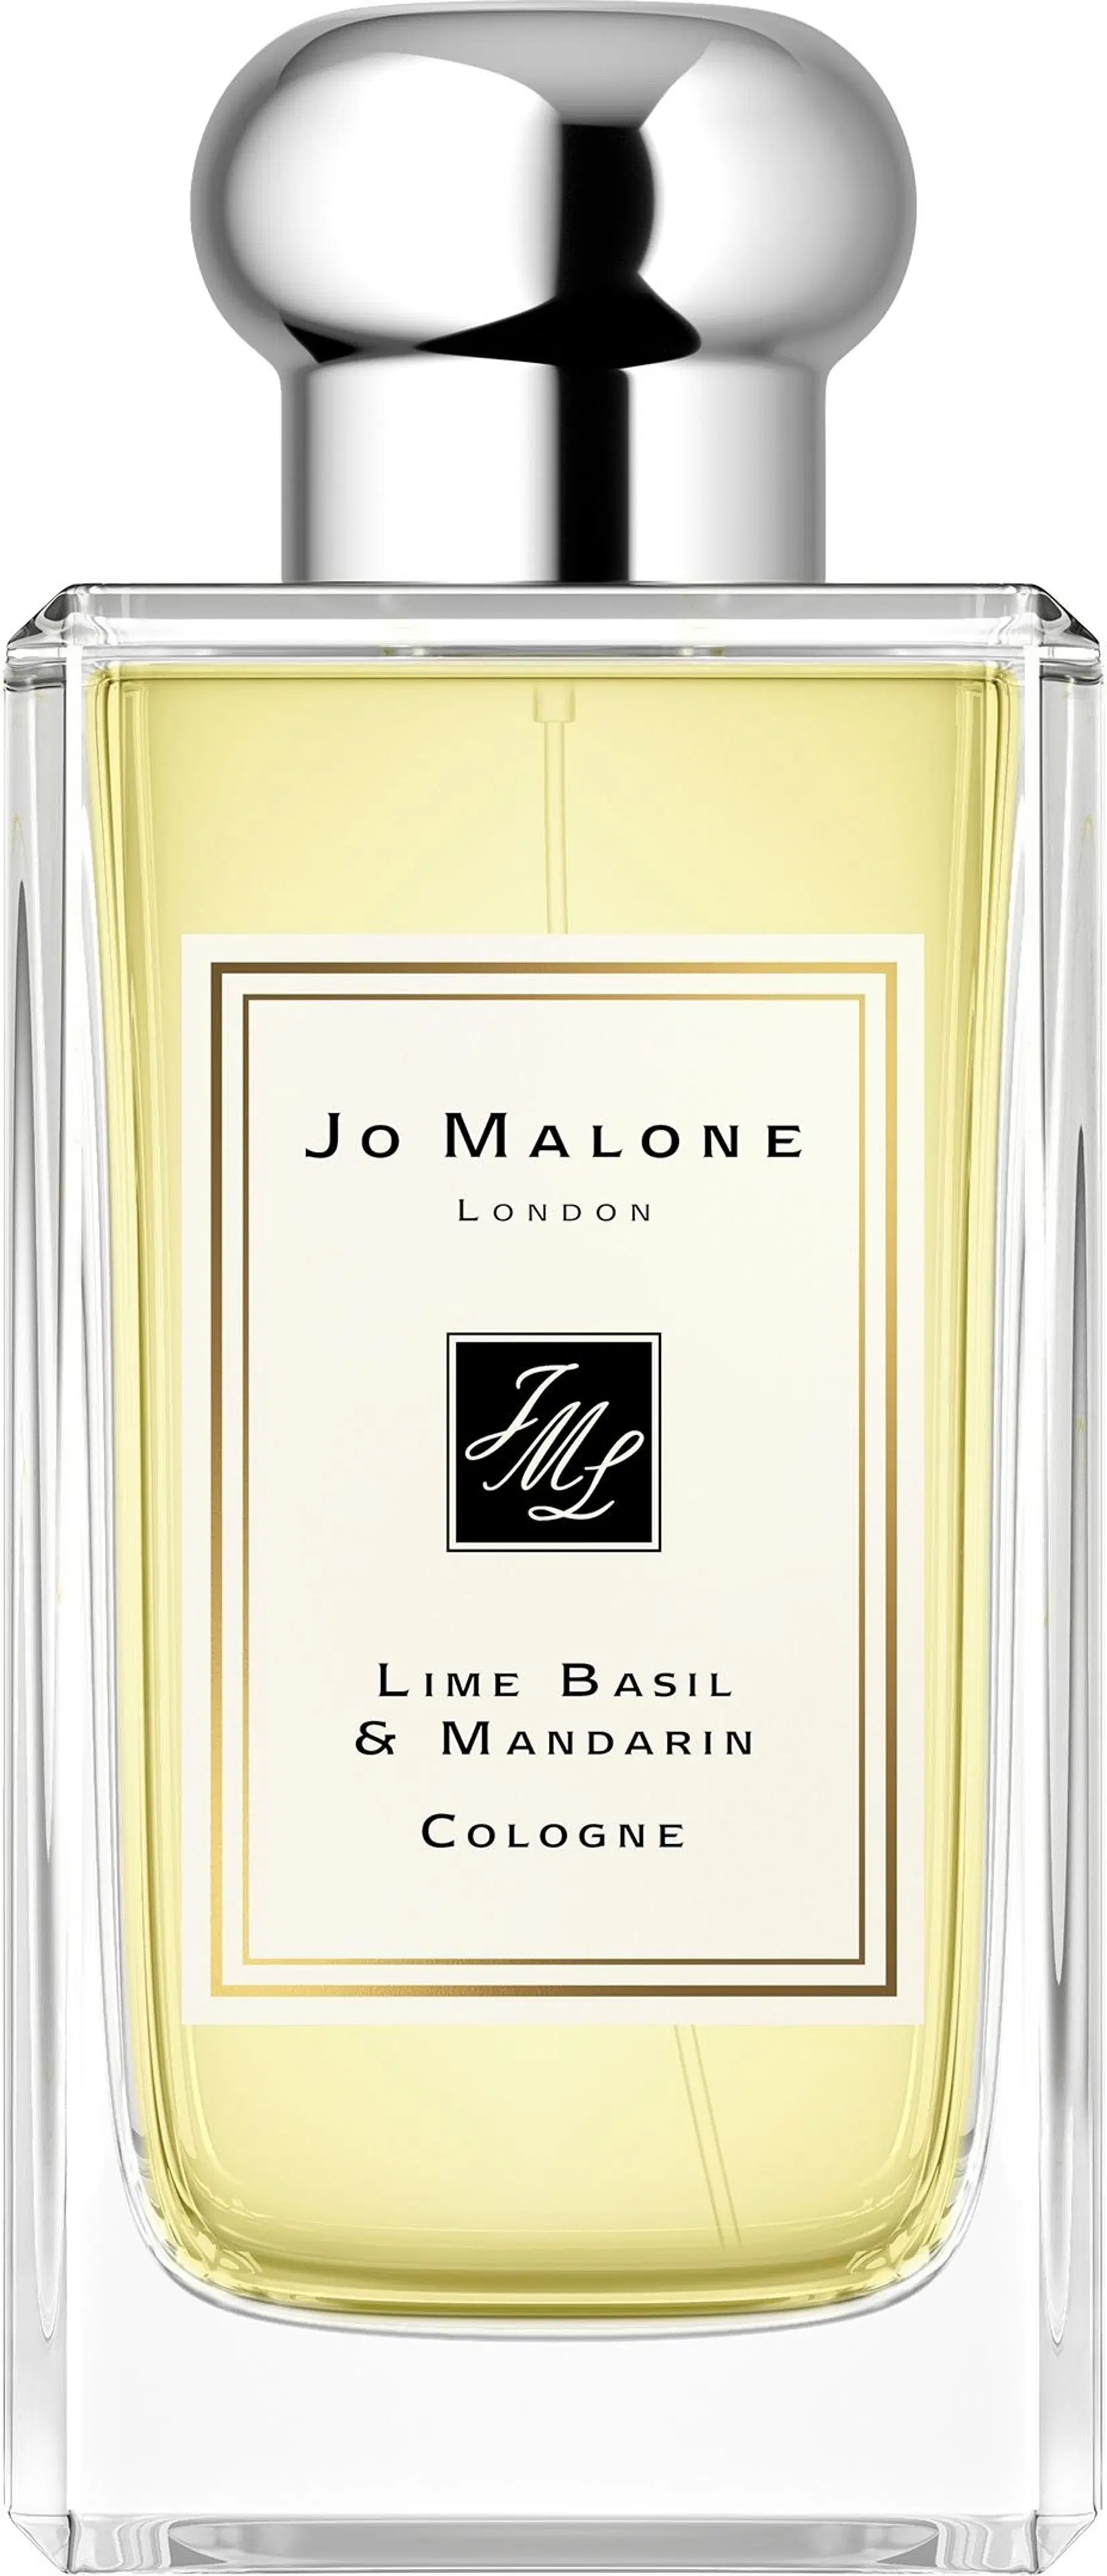 Jo Malone London Lime Basil & Mandarin Cologne EdT tuoksu 100 ml